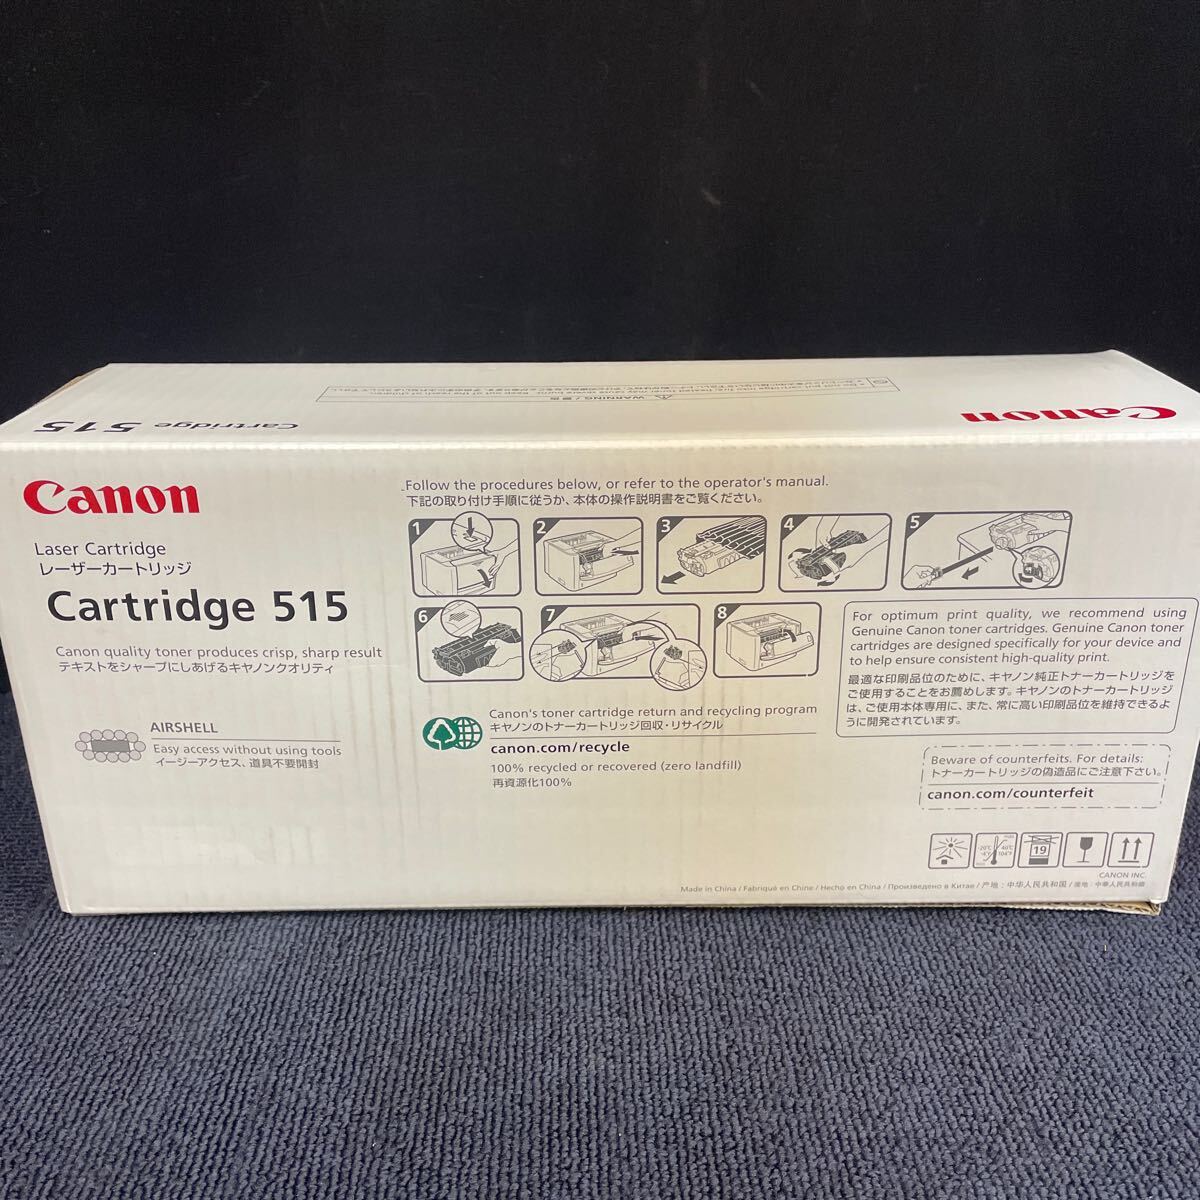 [ unopened ]CANON Laser cartridge 515 Canon toner cartridge LBP3310 original printer ink B88